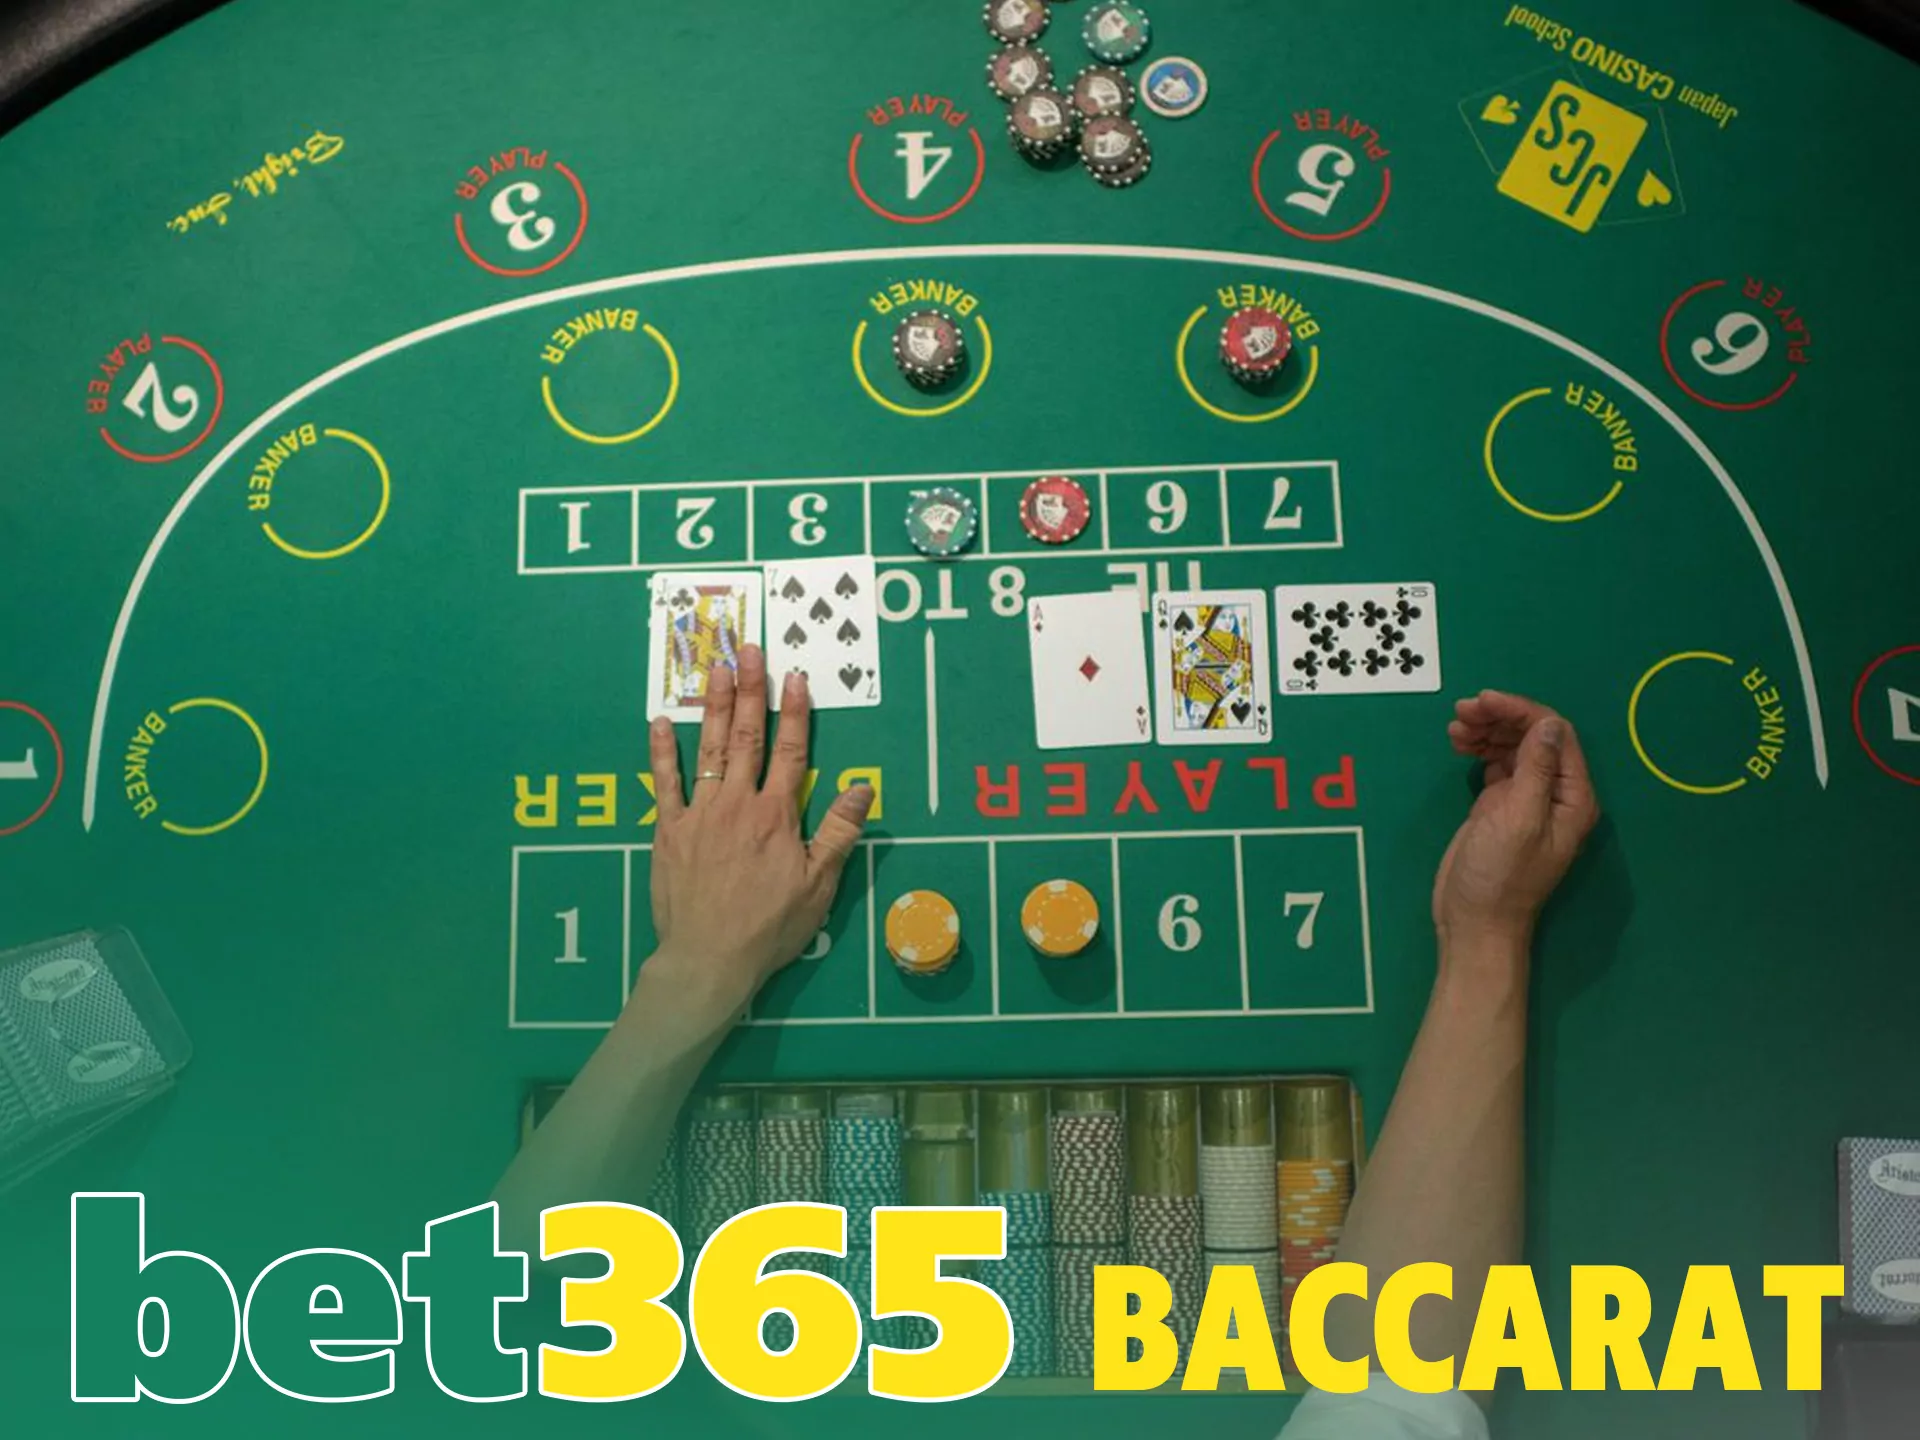 Play baccarat games at Bet365.